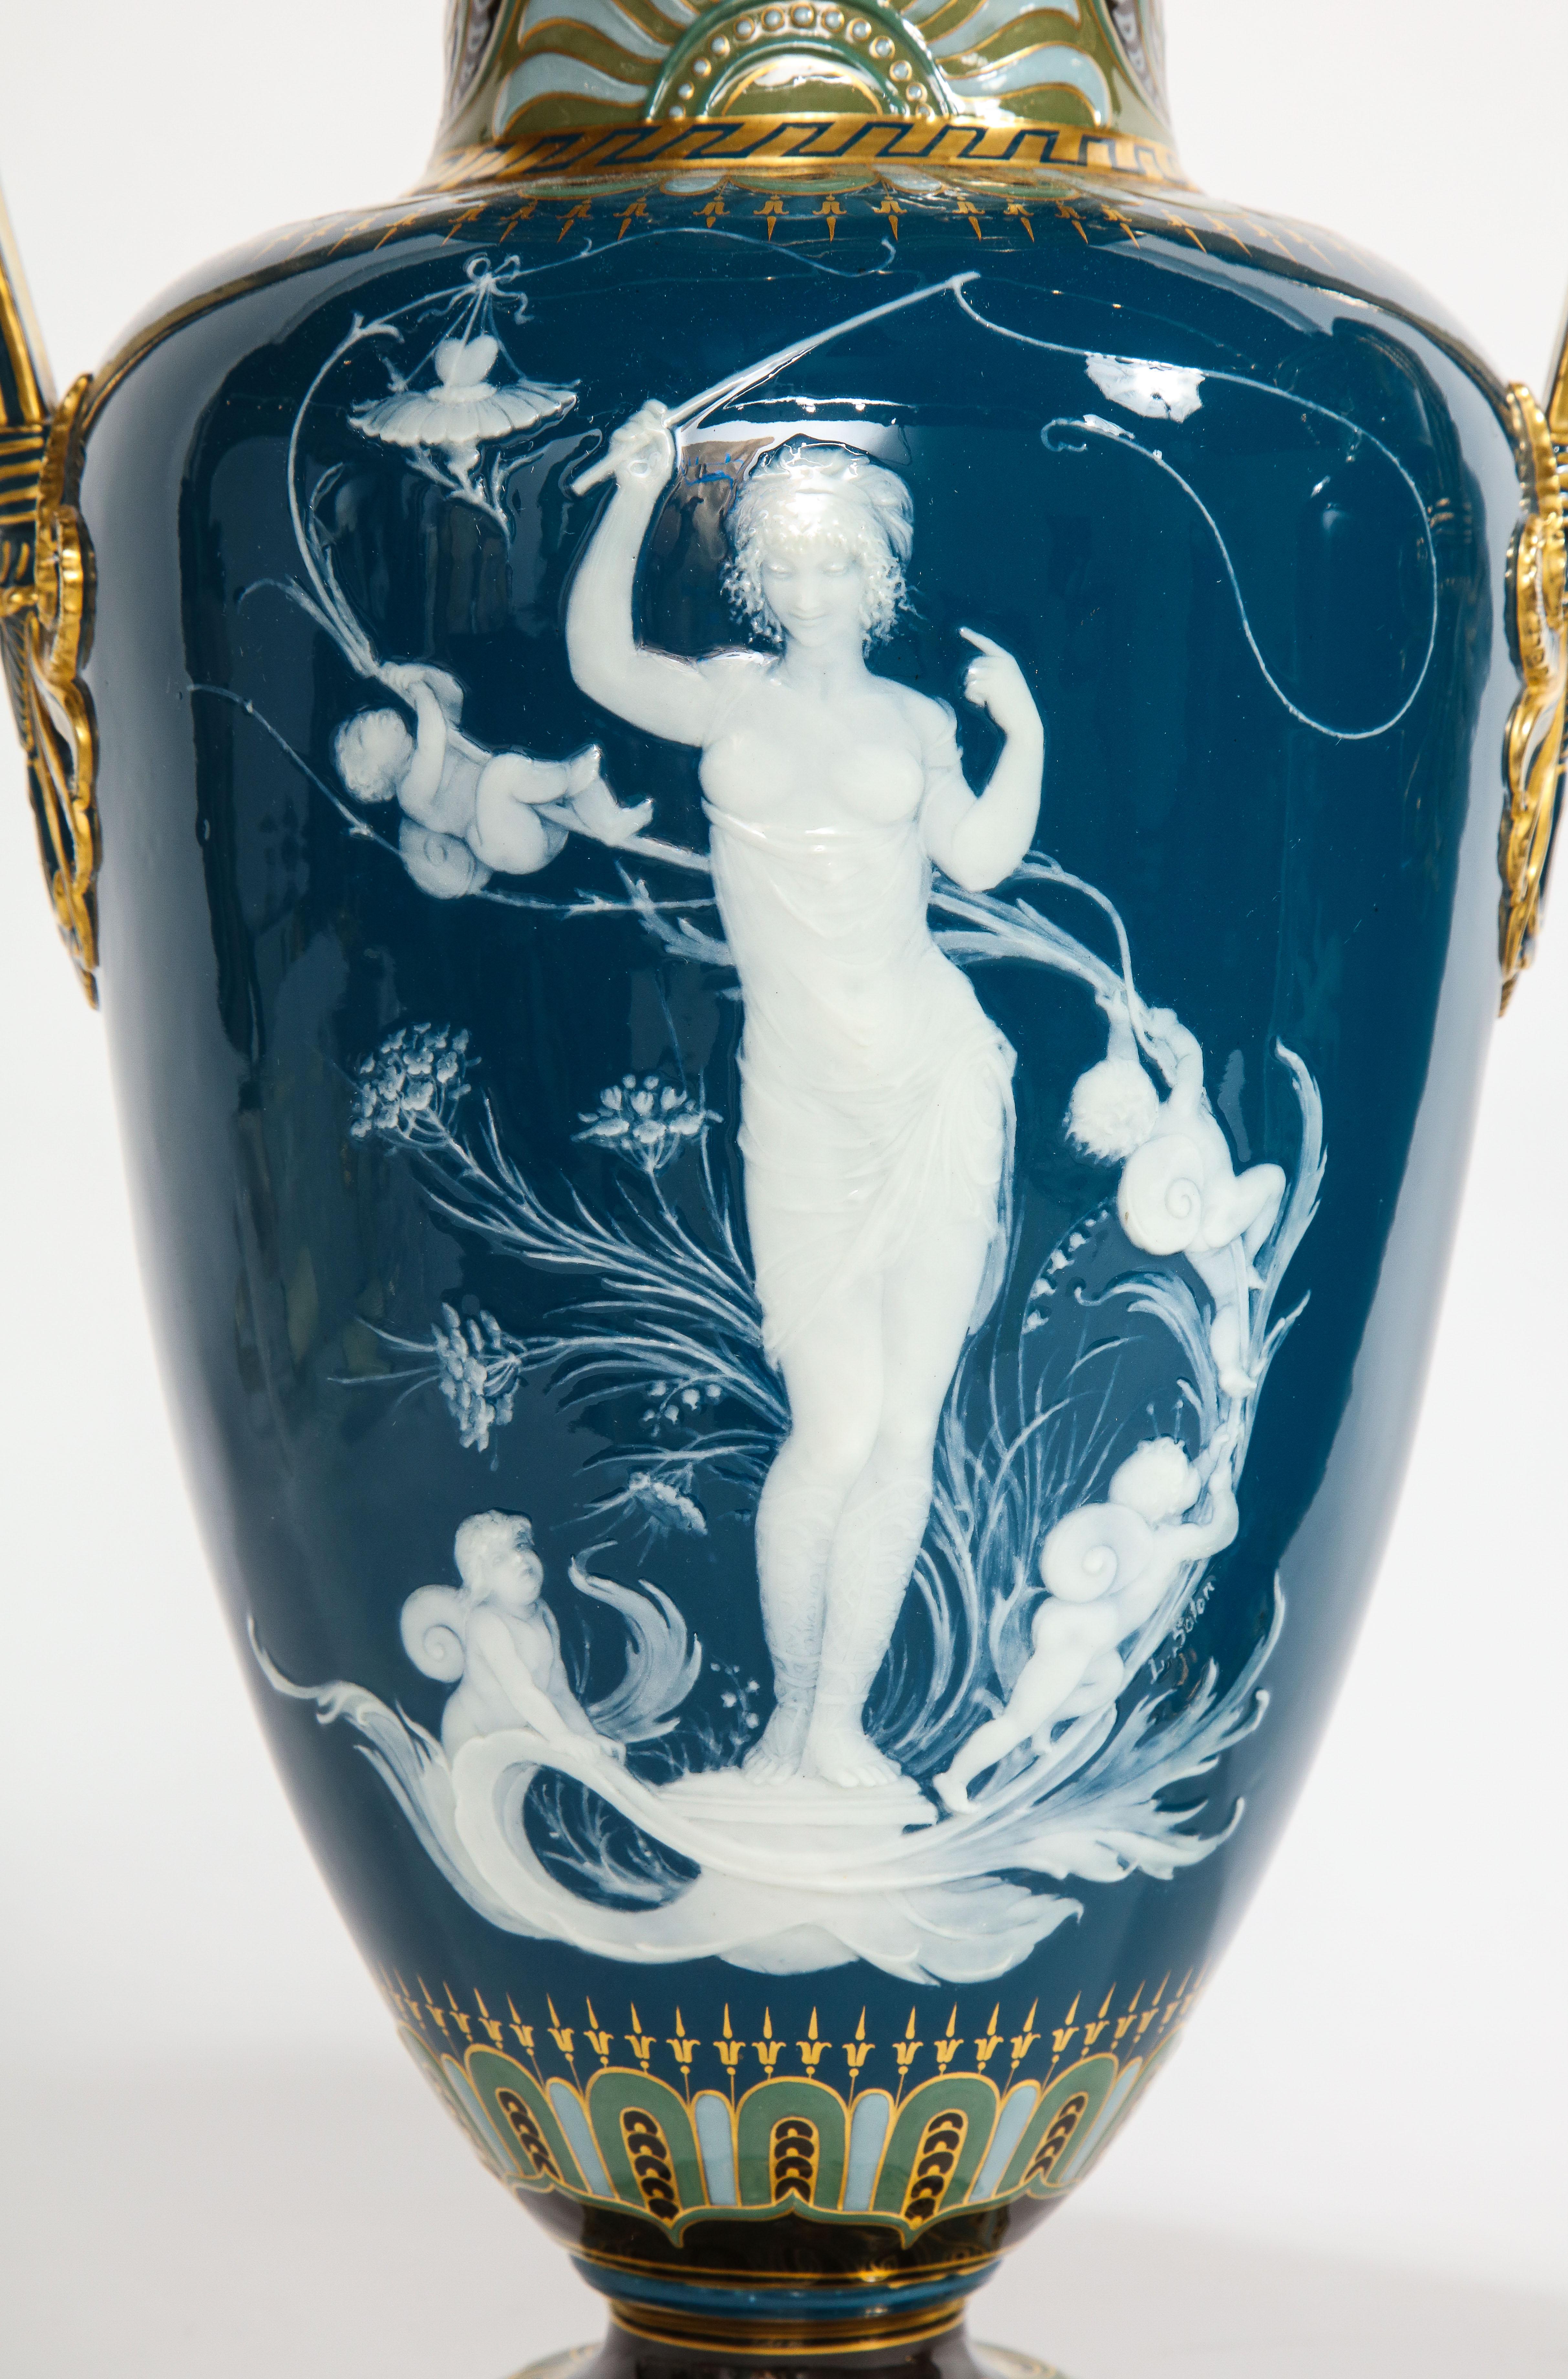 Hand-Carved Pr. Mintons Pâte-sur-pâte Blue-Ground Vases, 'Too Fast' & 'Too Slow', L. Solon